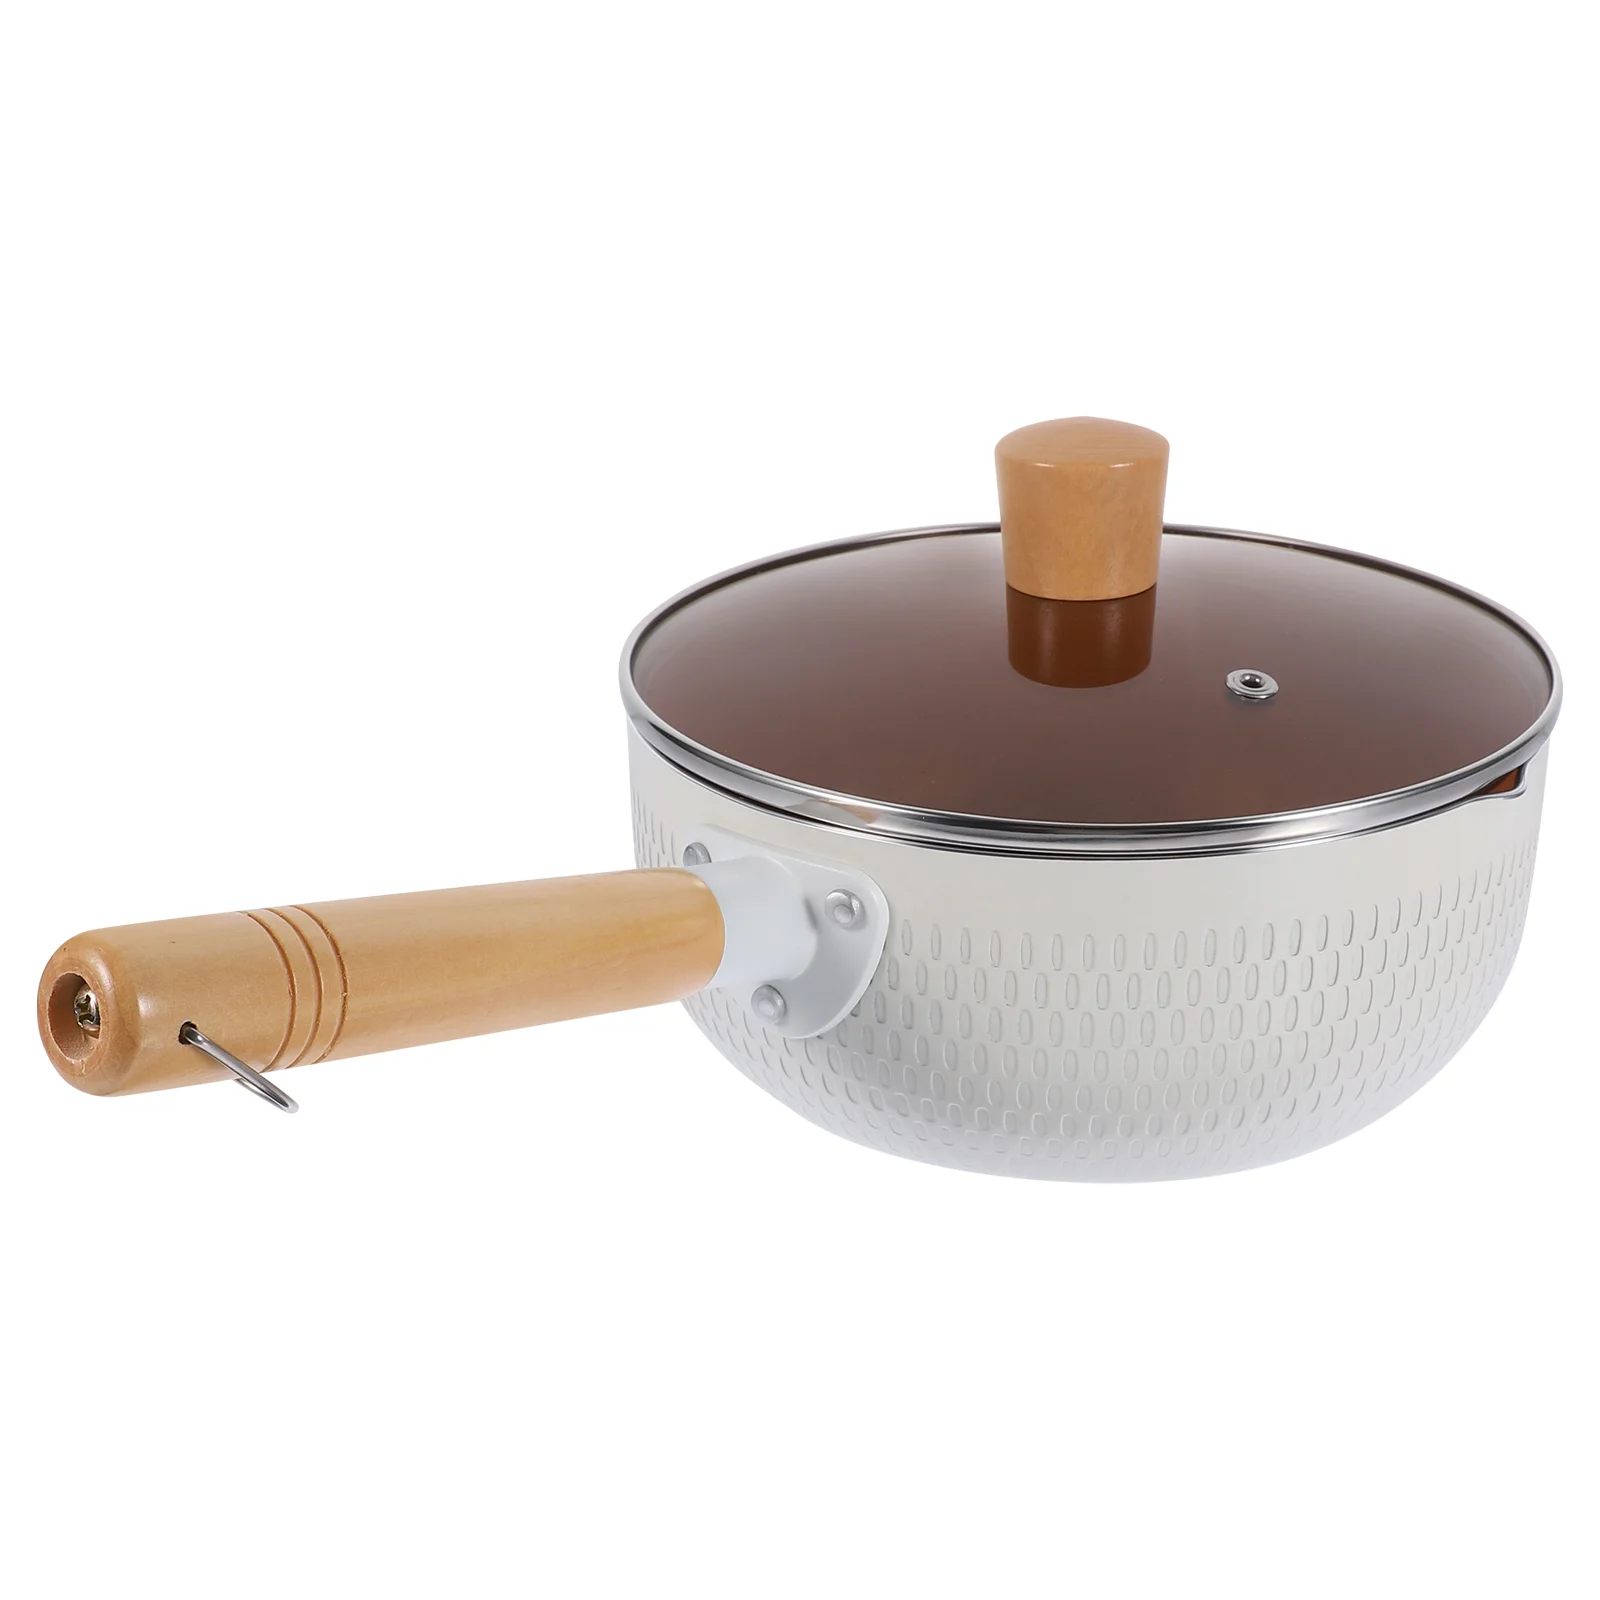 

Non Stick Pan Milk Pot Noodle Noodles Saucepan With Wooden Handle Serving Bowl White Household Nonstick Baby